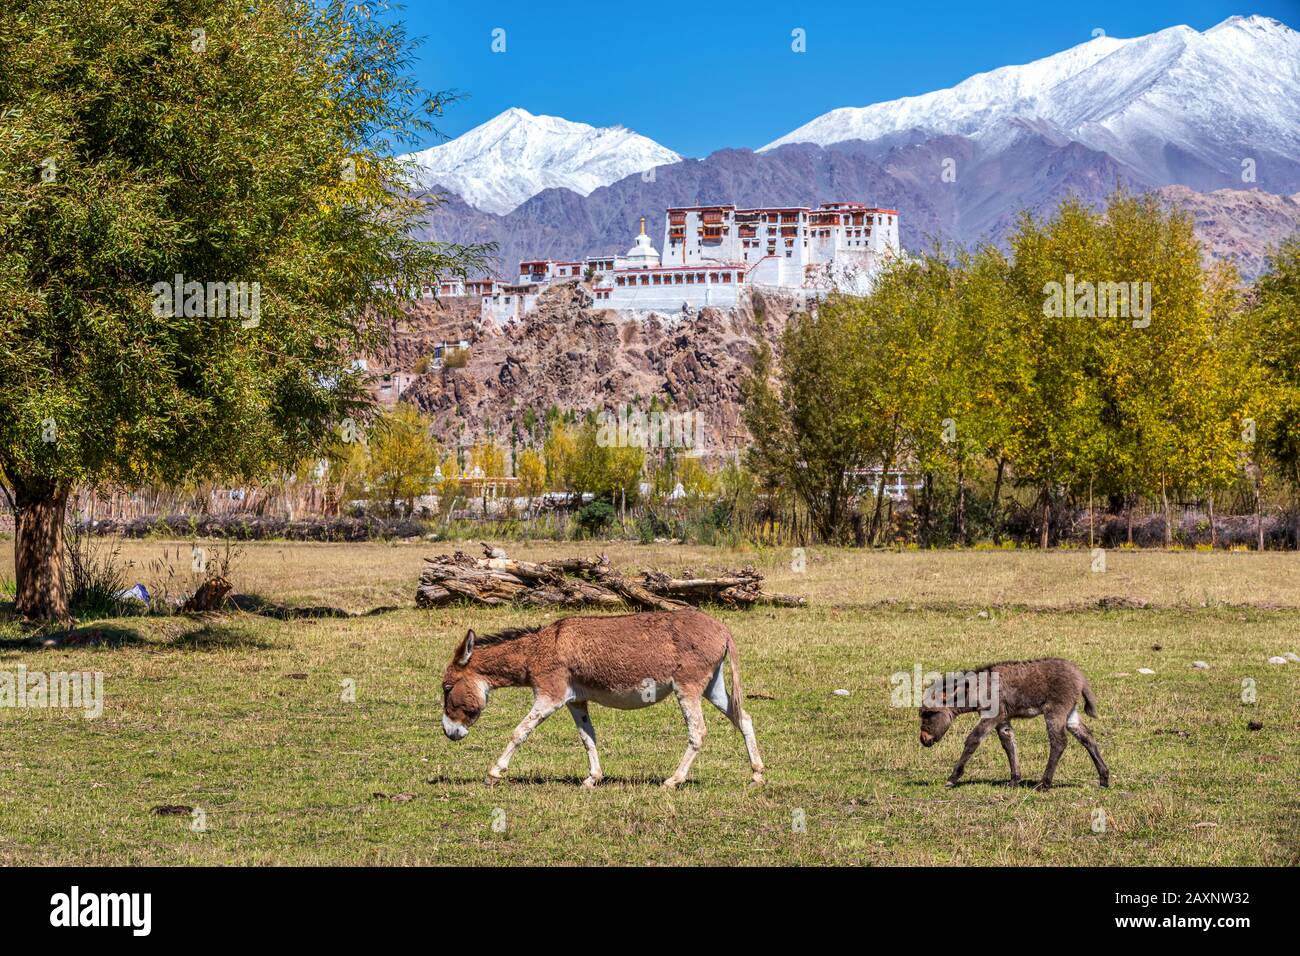 Stakna monastero o Stakna Gompa, Ladakh, Jammu e Kashmir India Foto Stock